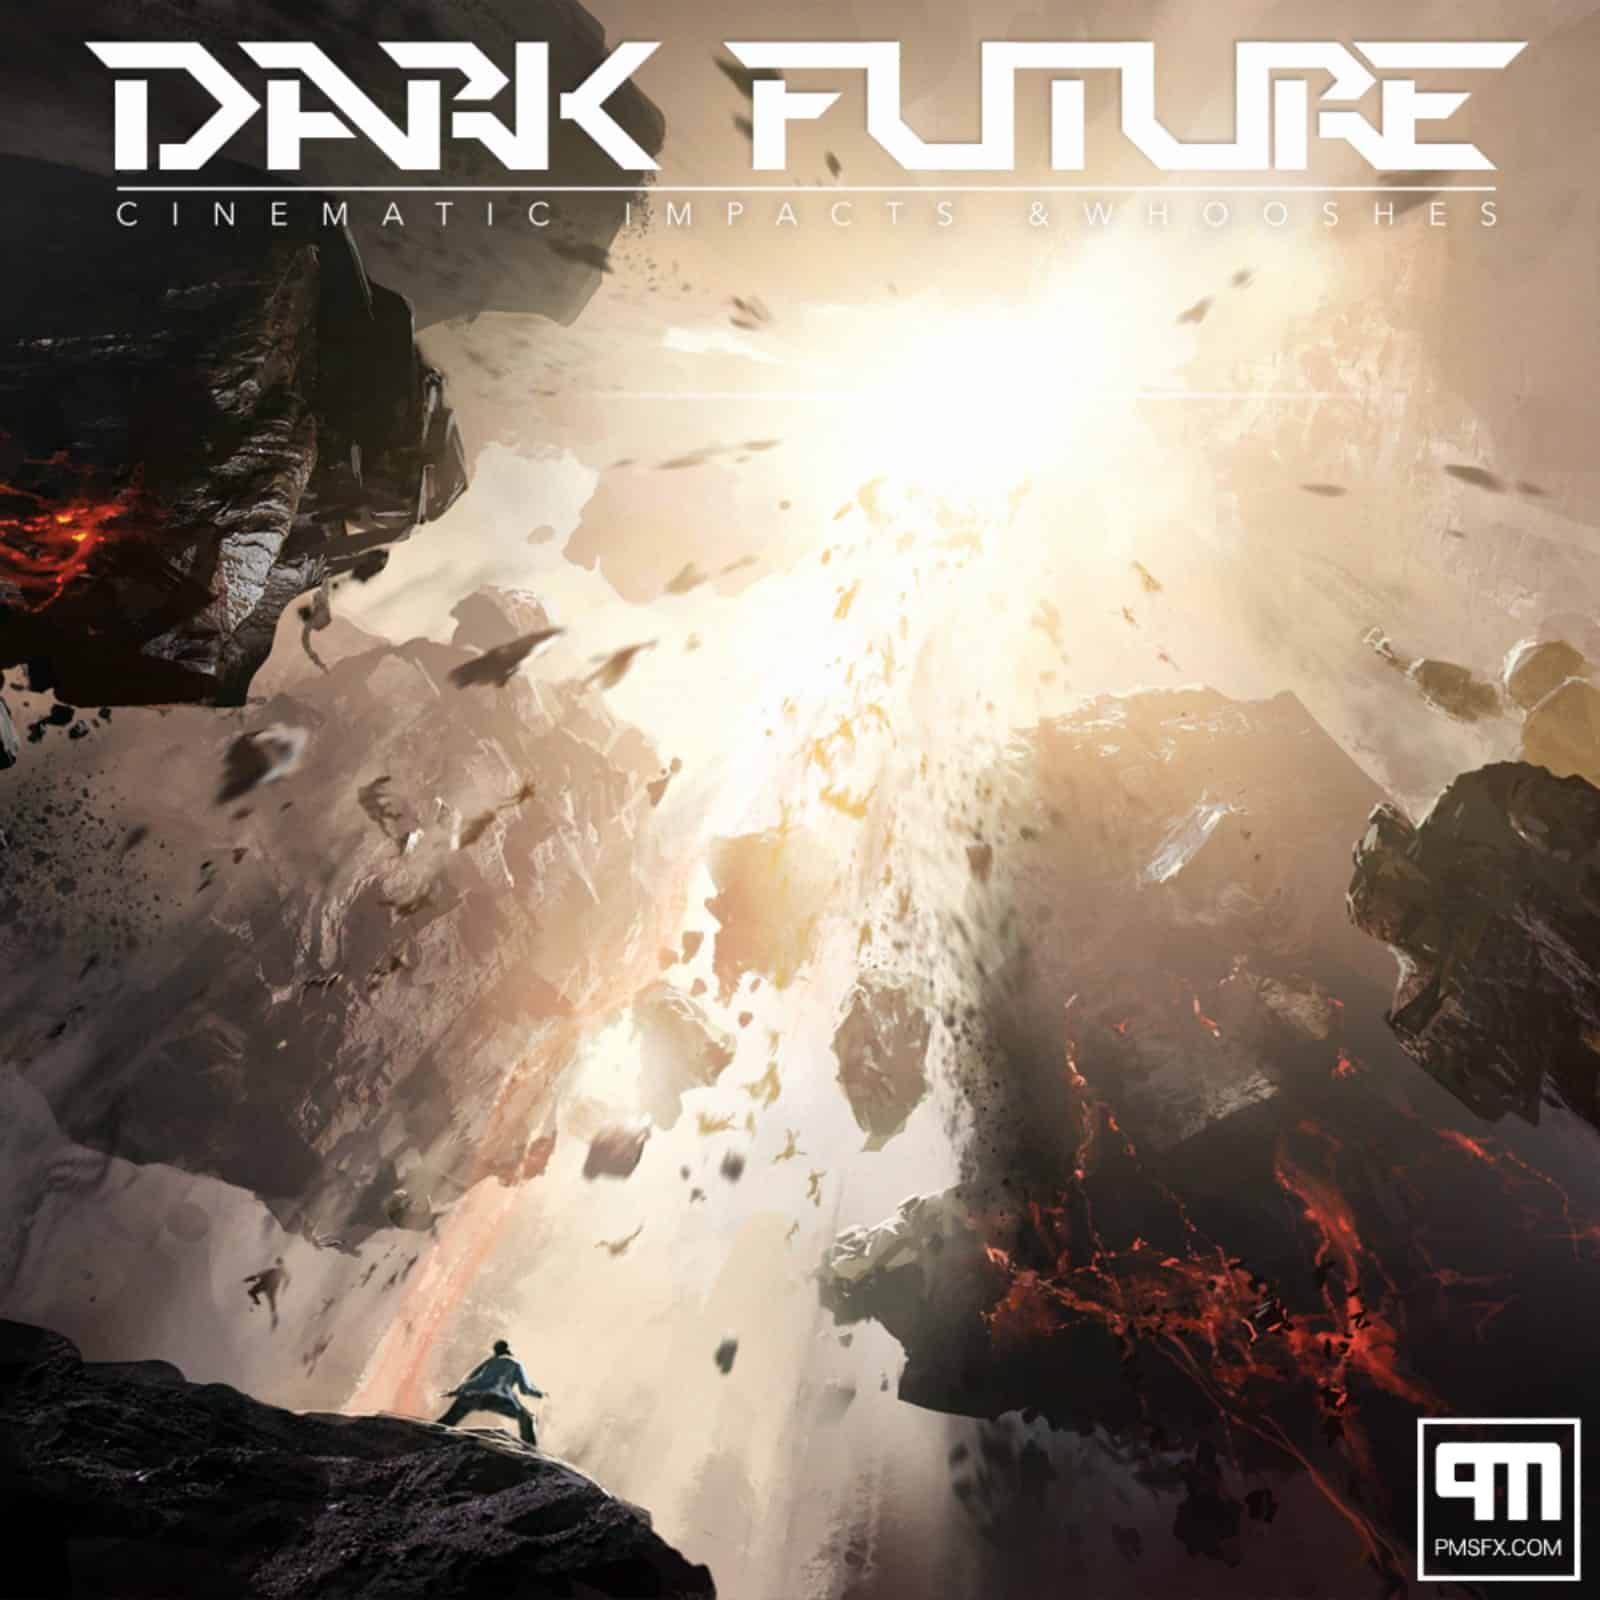 PMSFX Releases Dark Future a Collection of Dark Futuristic Sound Effects